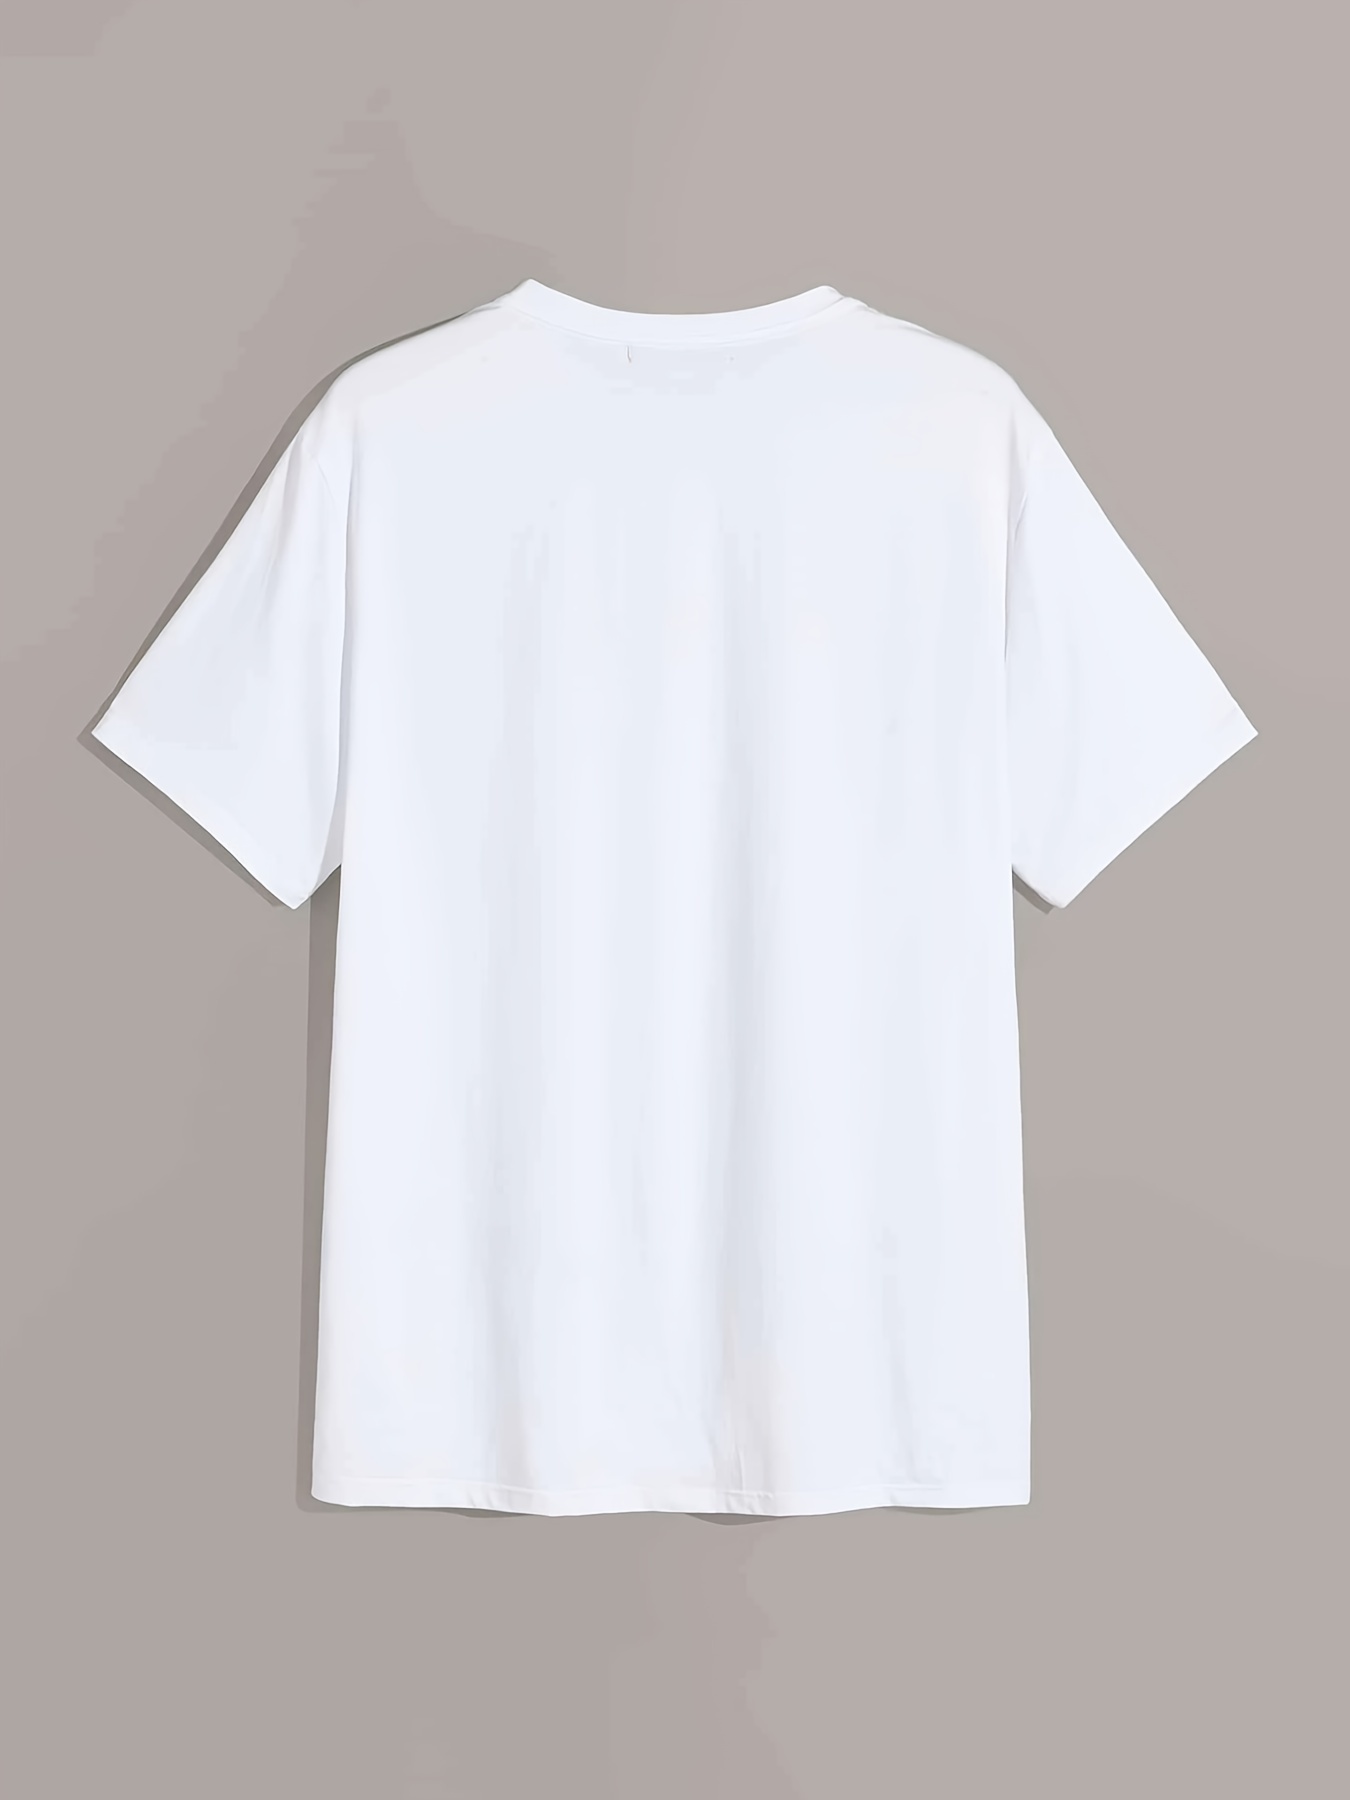 Camiseta de algodón para hombre, color liso, manga corta, 3 unidades,  camisetas de verano para hombre